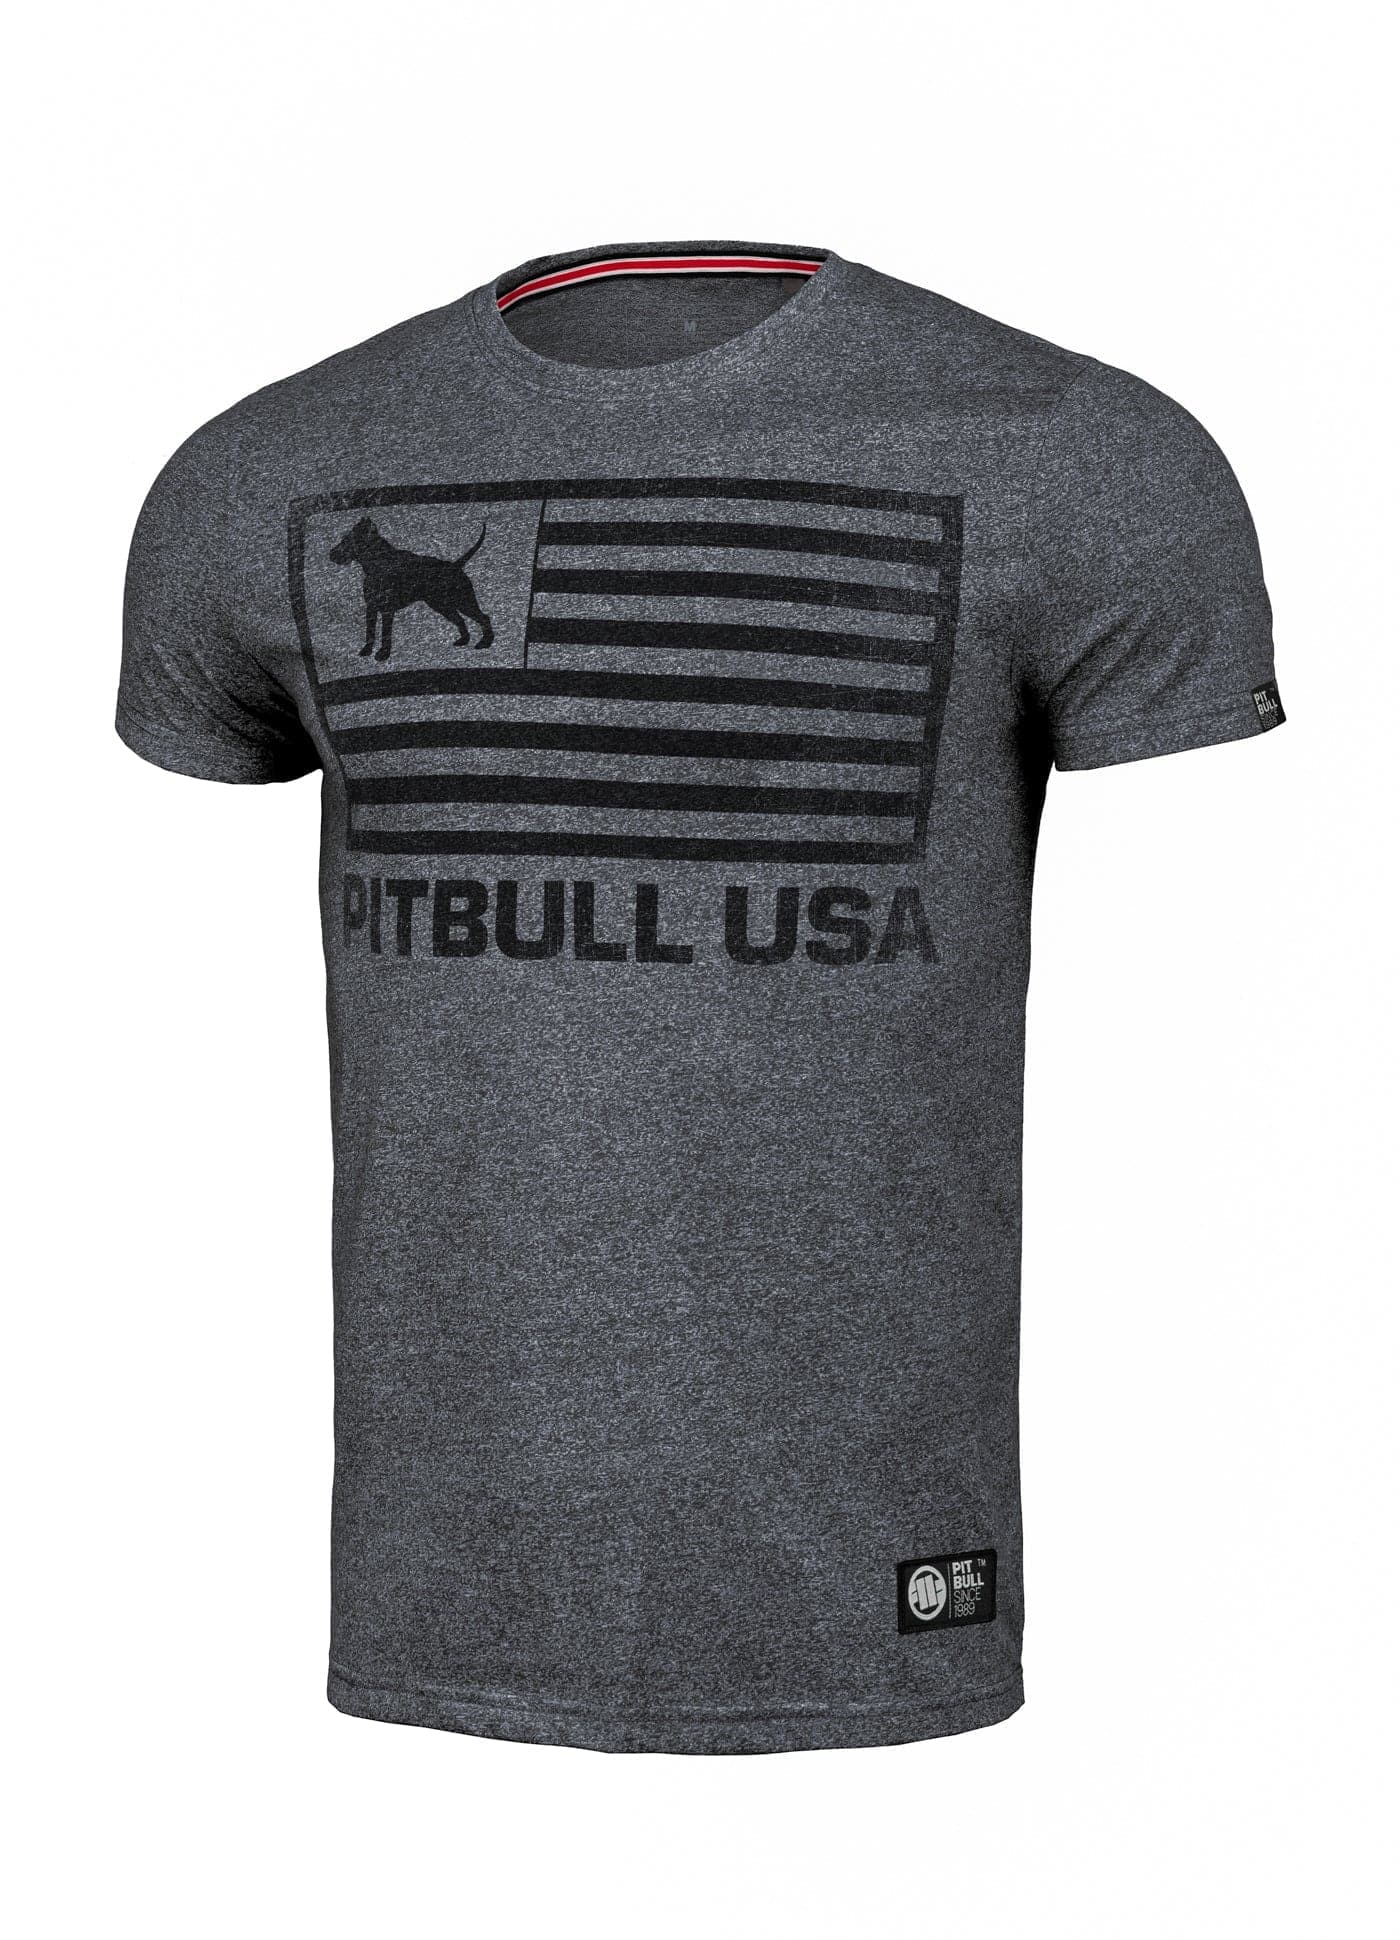 T-shirt PITBULL USA Middleweight 190 Custom Fit Dark Navy MLG